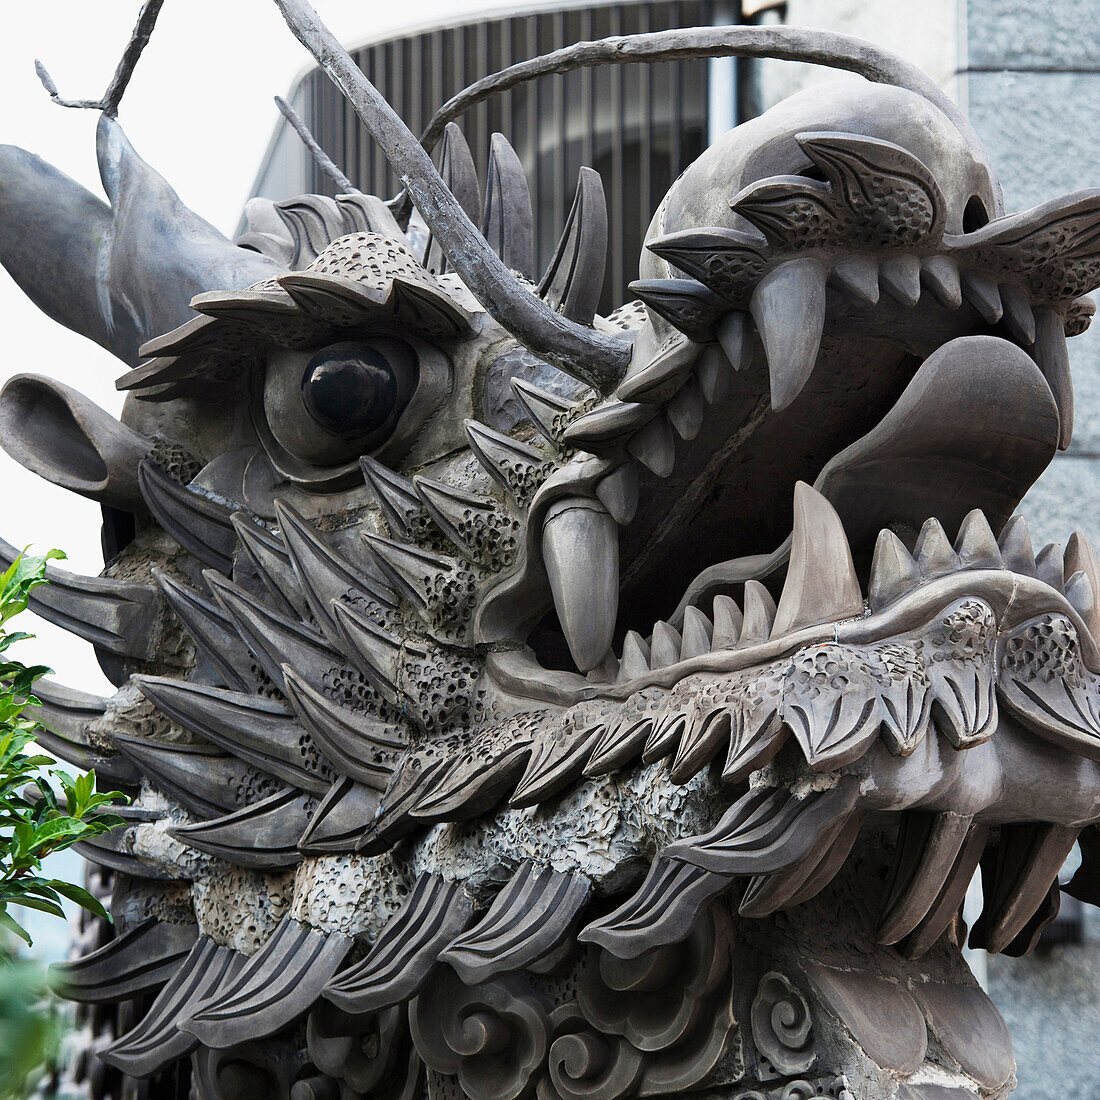 'Close-Up Face Of A Statue Of Animal Likeness; Nagasaki, Japan'